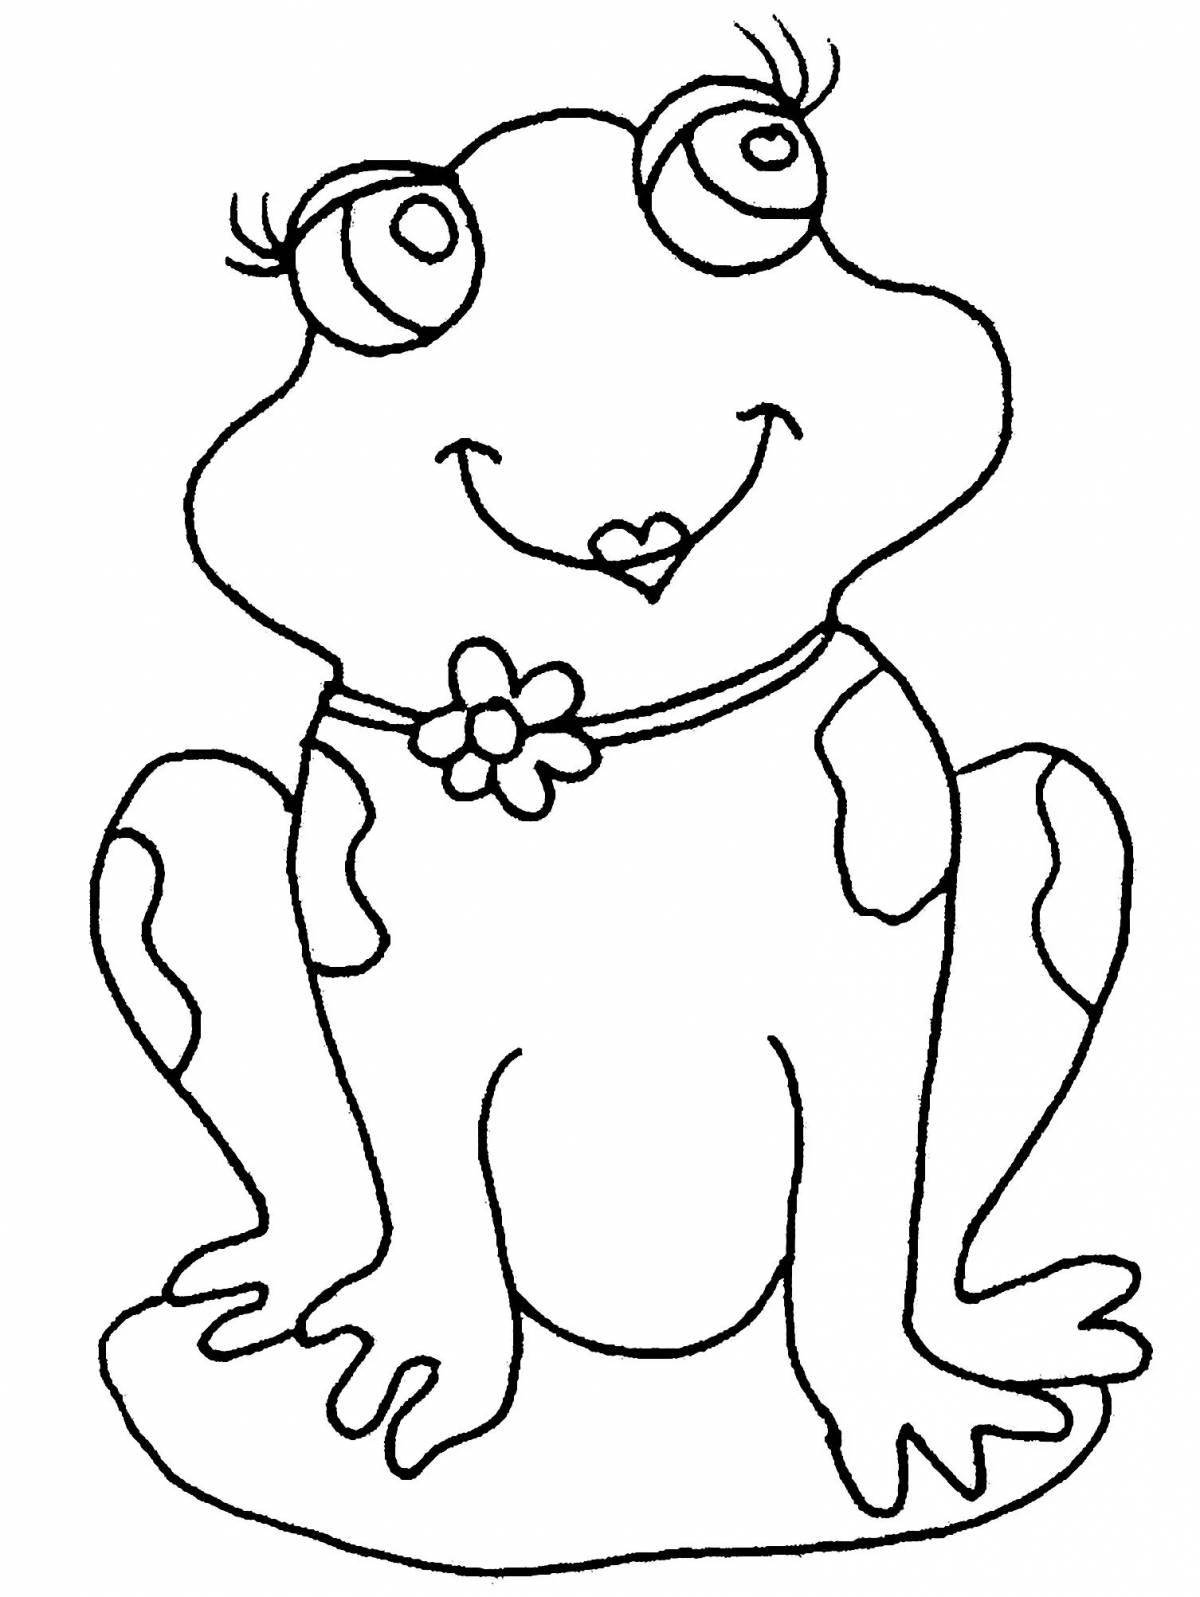 Fun coloring book frog for kids